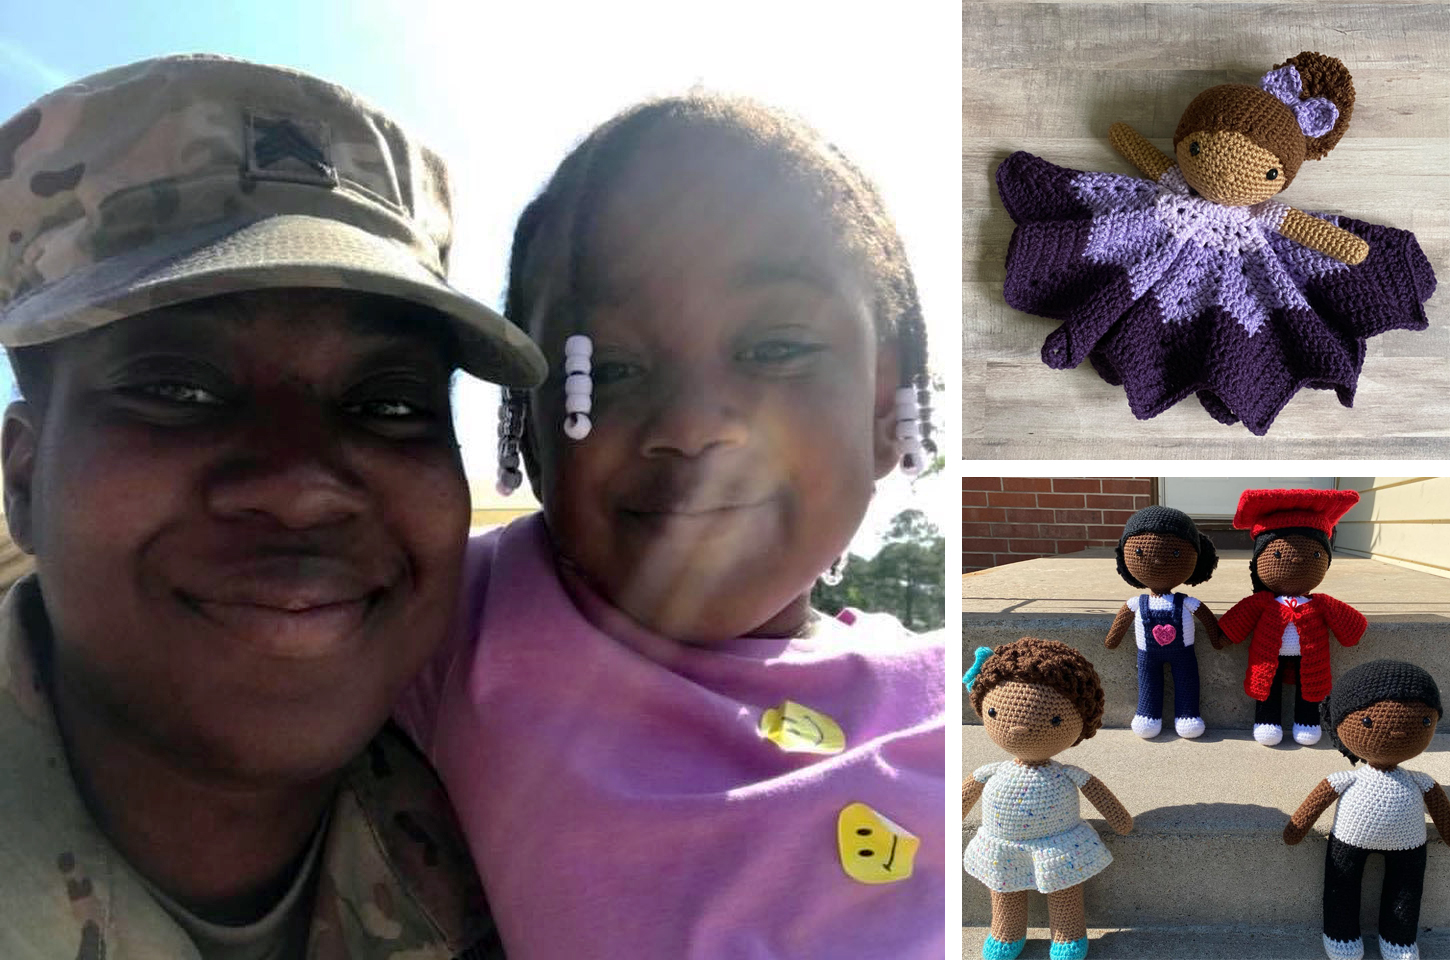 Repairing weapons to crocheting dolls: Soldier deploys maker skills to craft Daya & Me